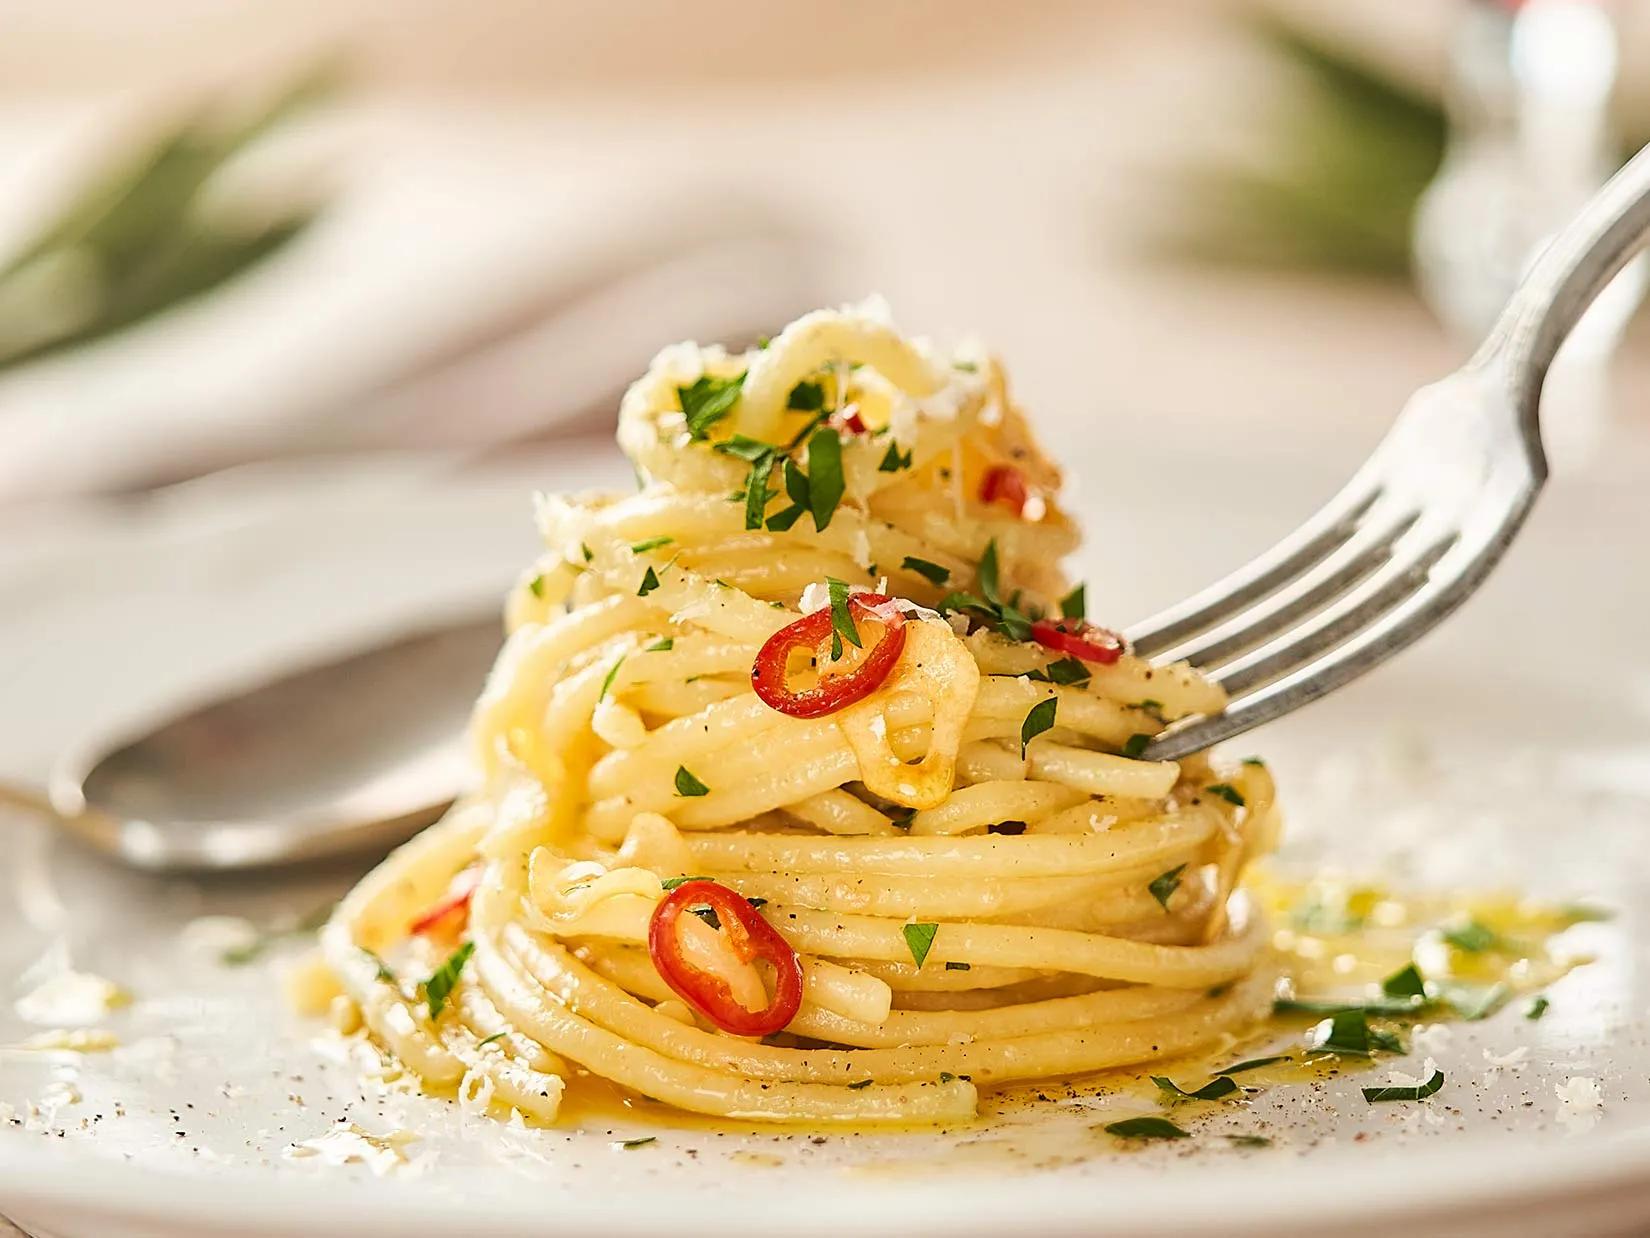 Spaghetti aglio e olio - italienisches Rezept - Gustinis Feinkost Blog